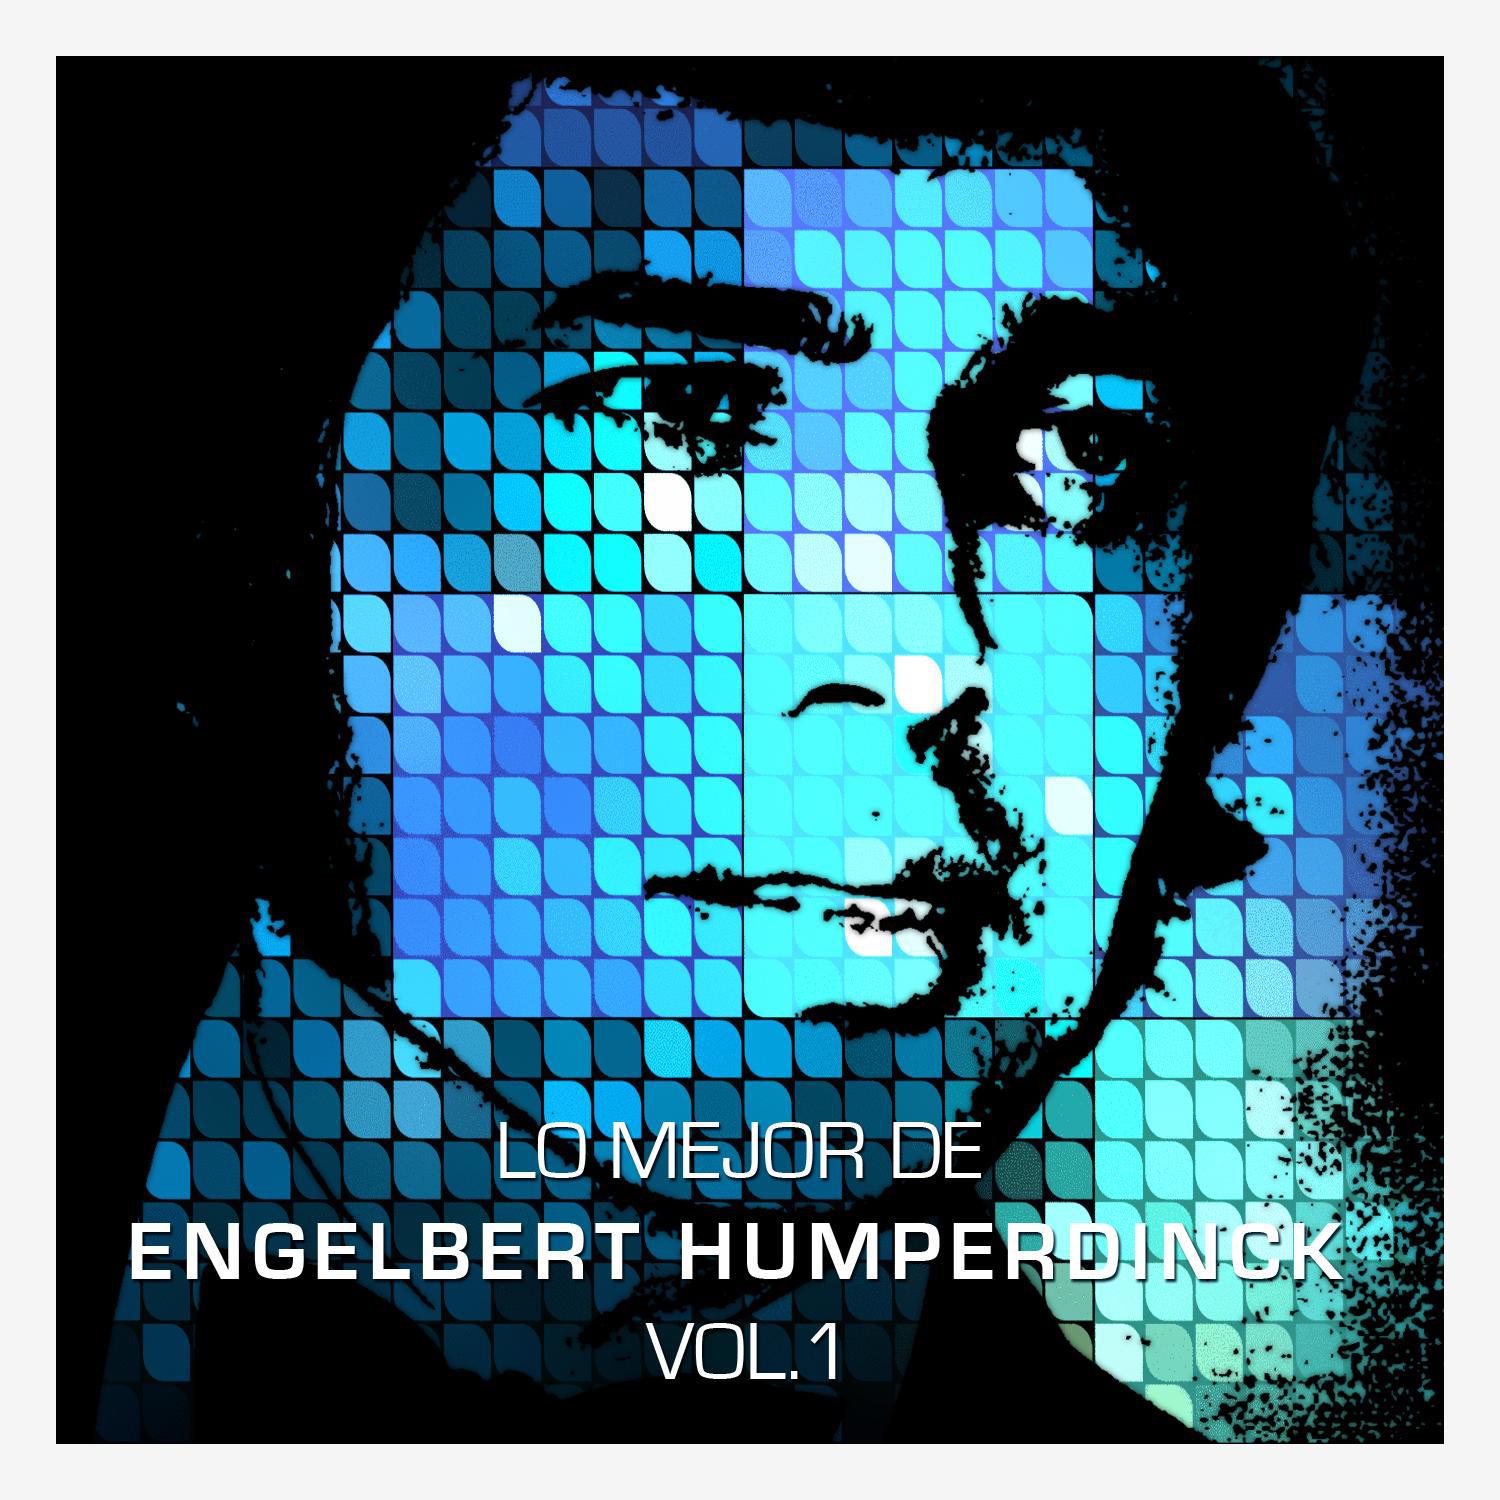 Lo Mejor de Engelbert Humperdinck Vol. 1